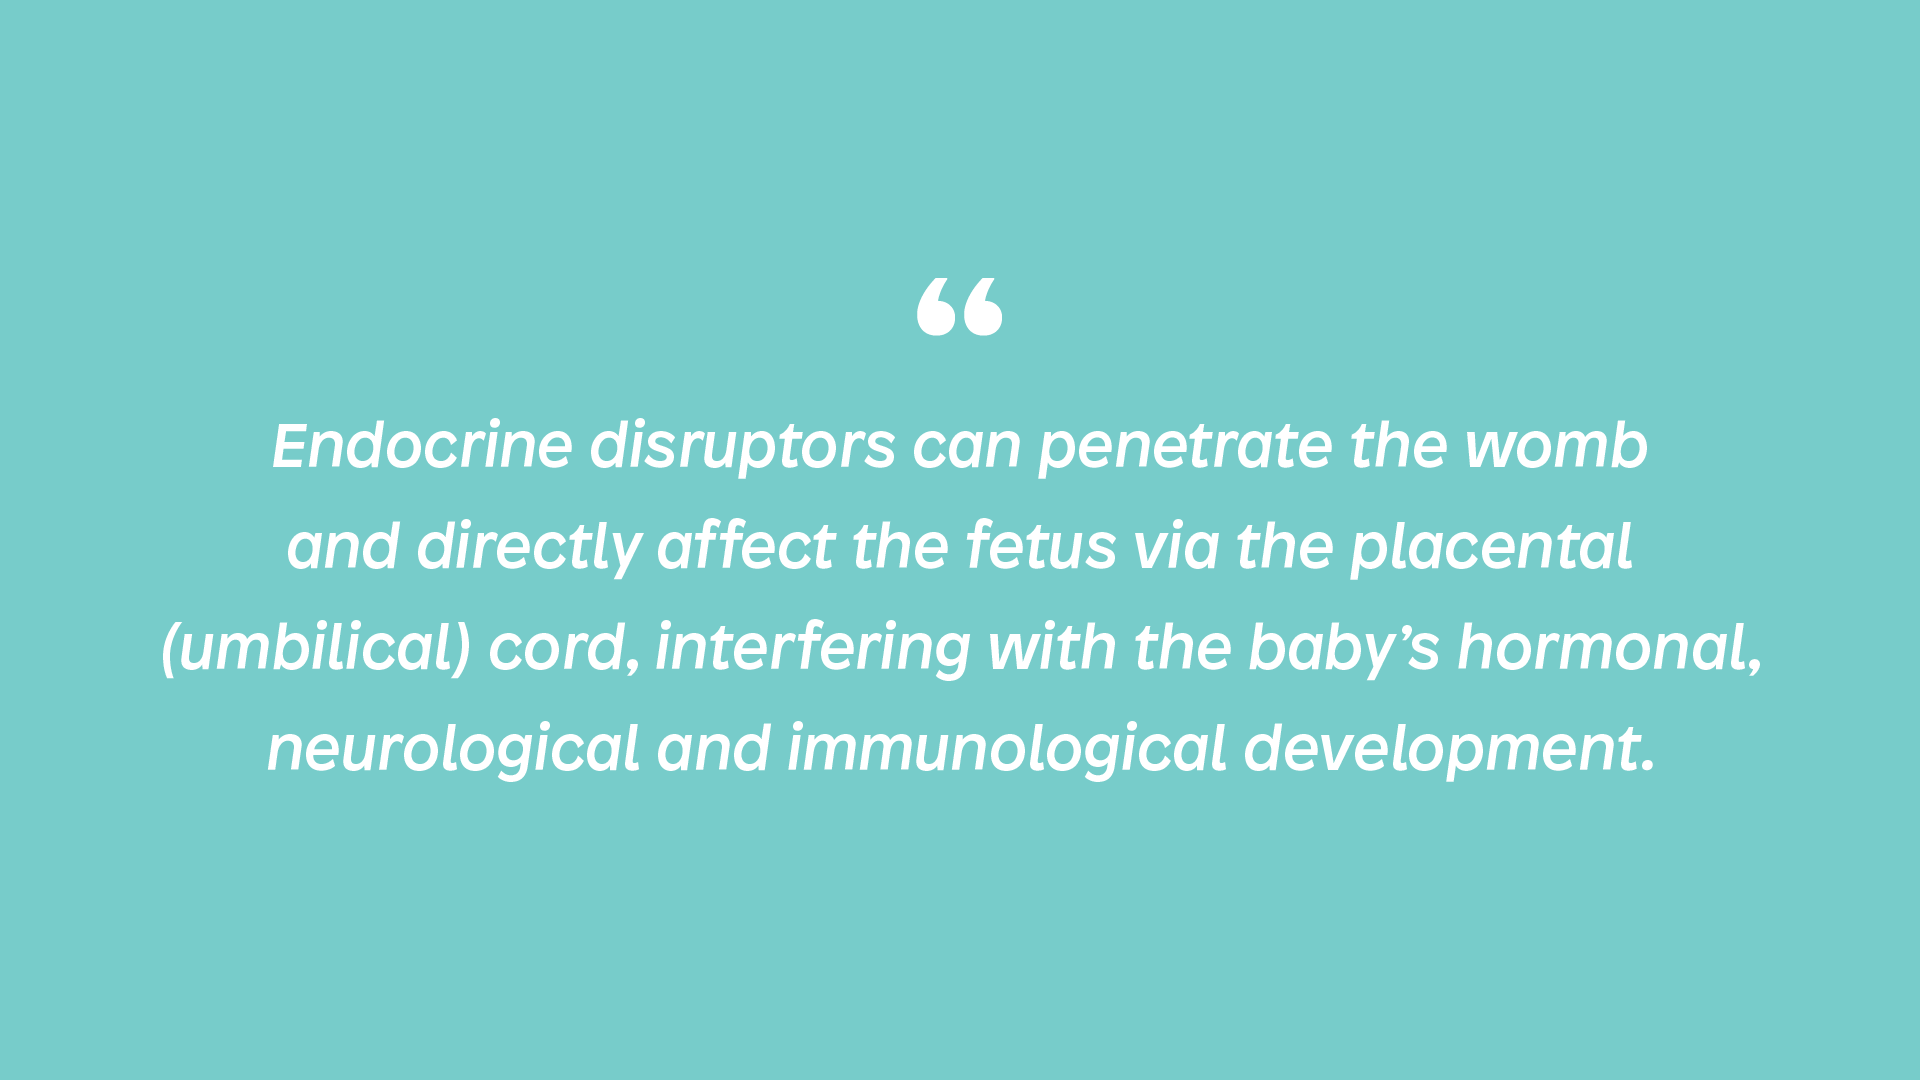 Endocrine disruptors affect the fetus